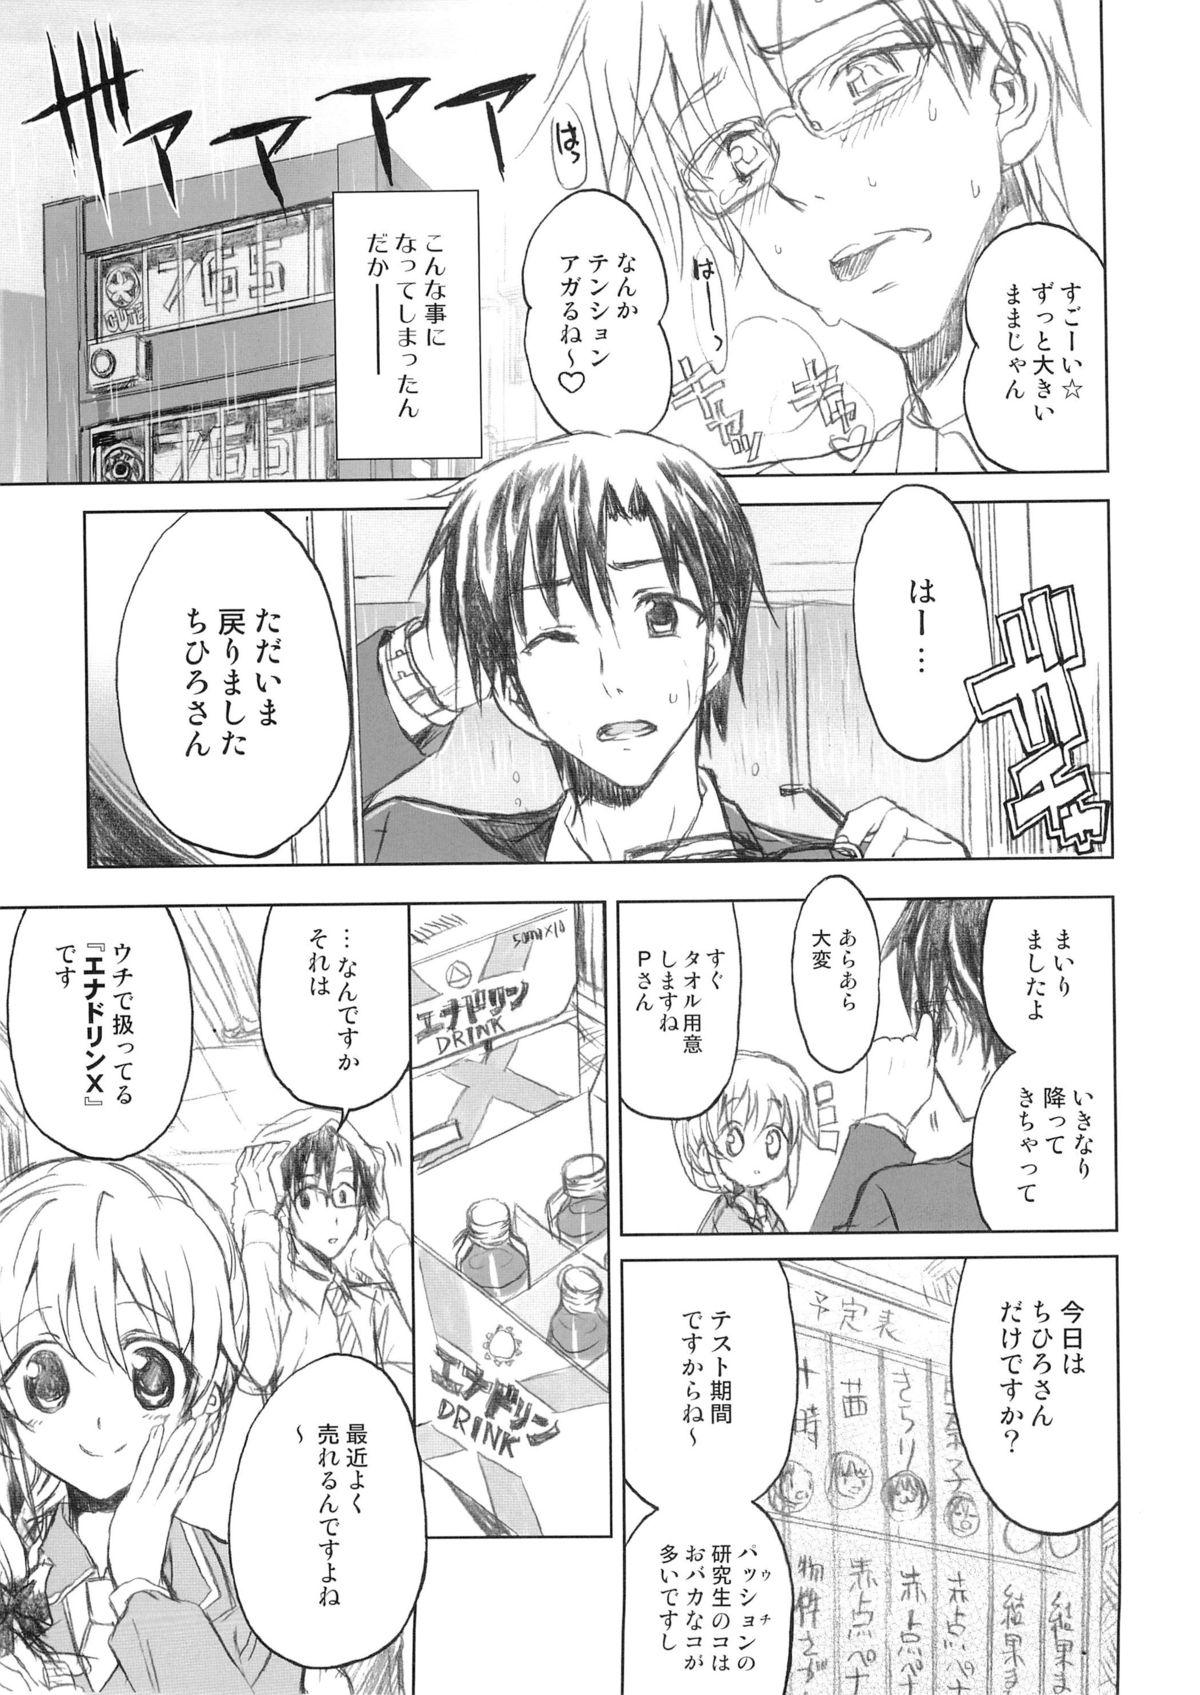 Blow PASSION FRUITS GIRLS #2 "Jougasaki Mika" - The idolmaster Retro - Page 8